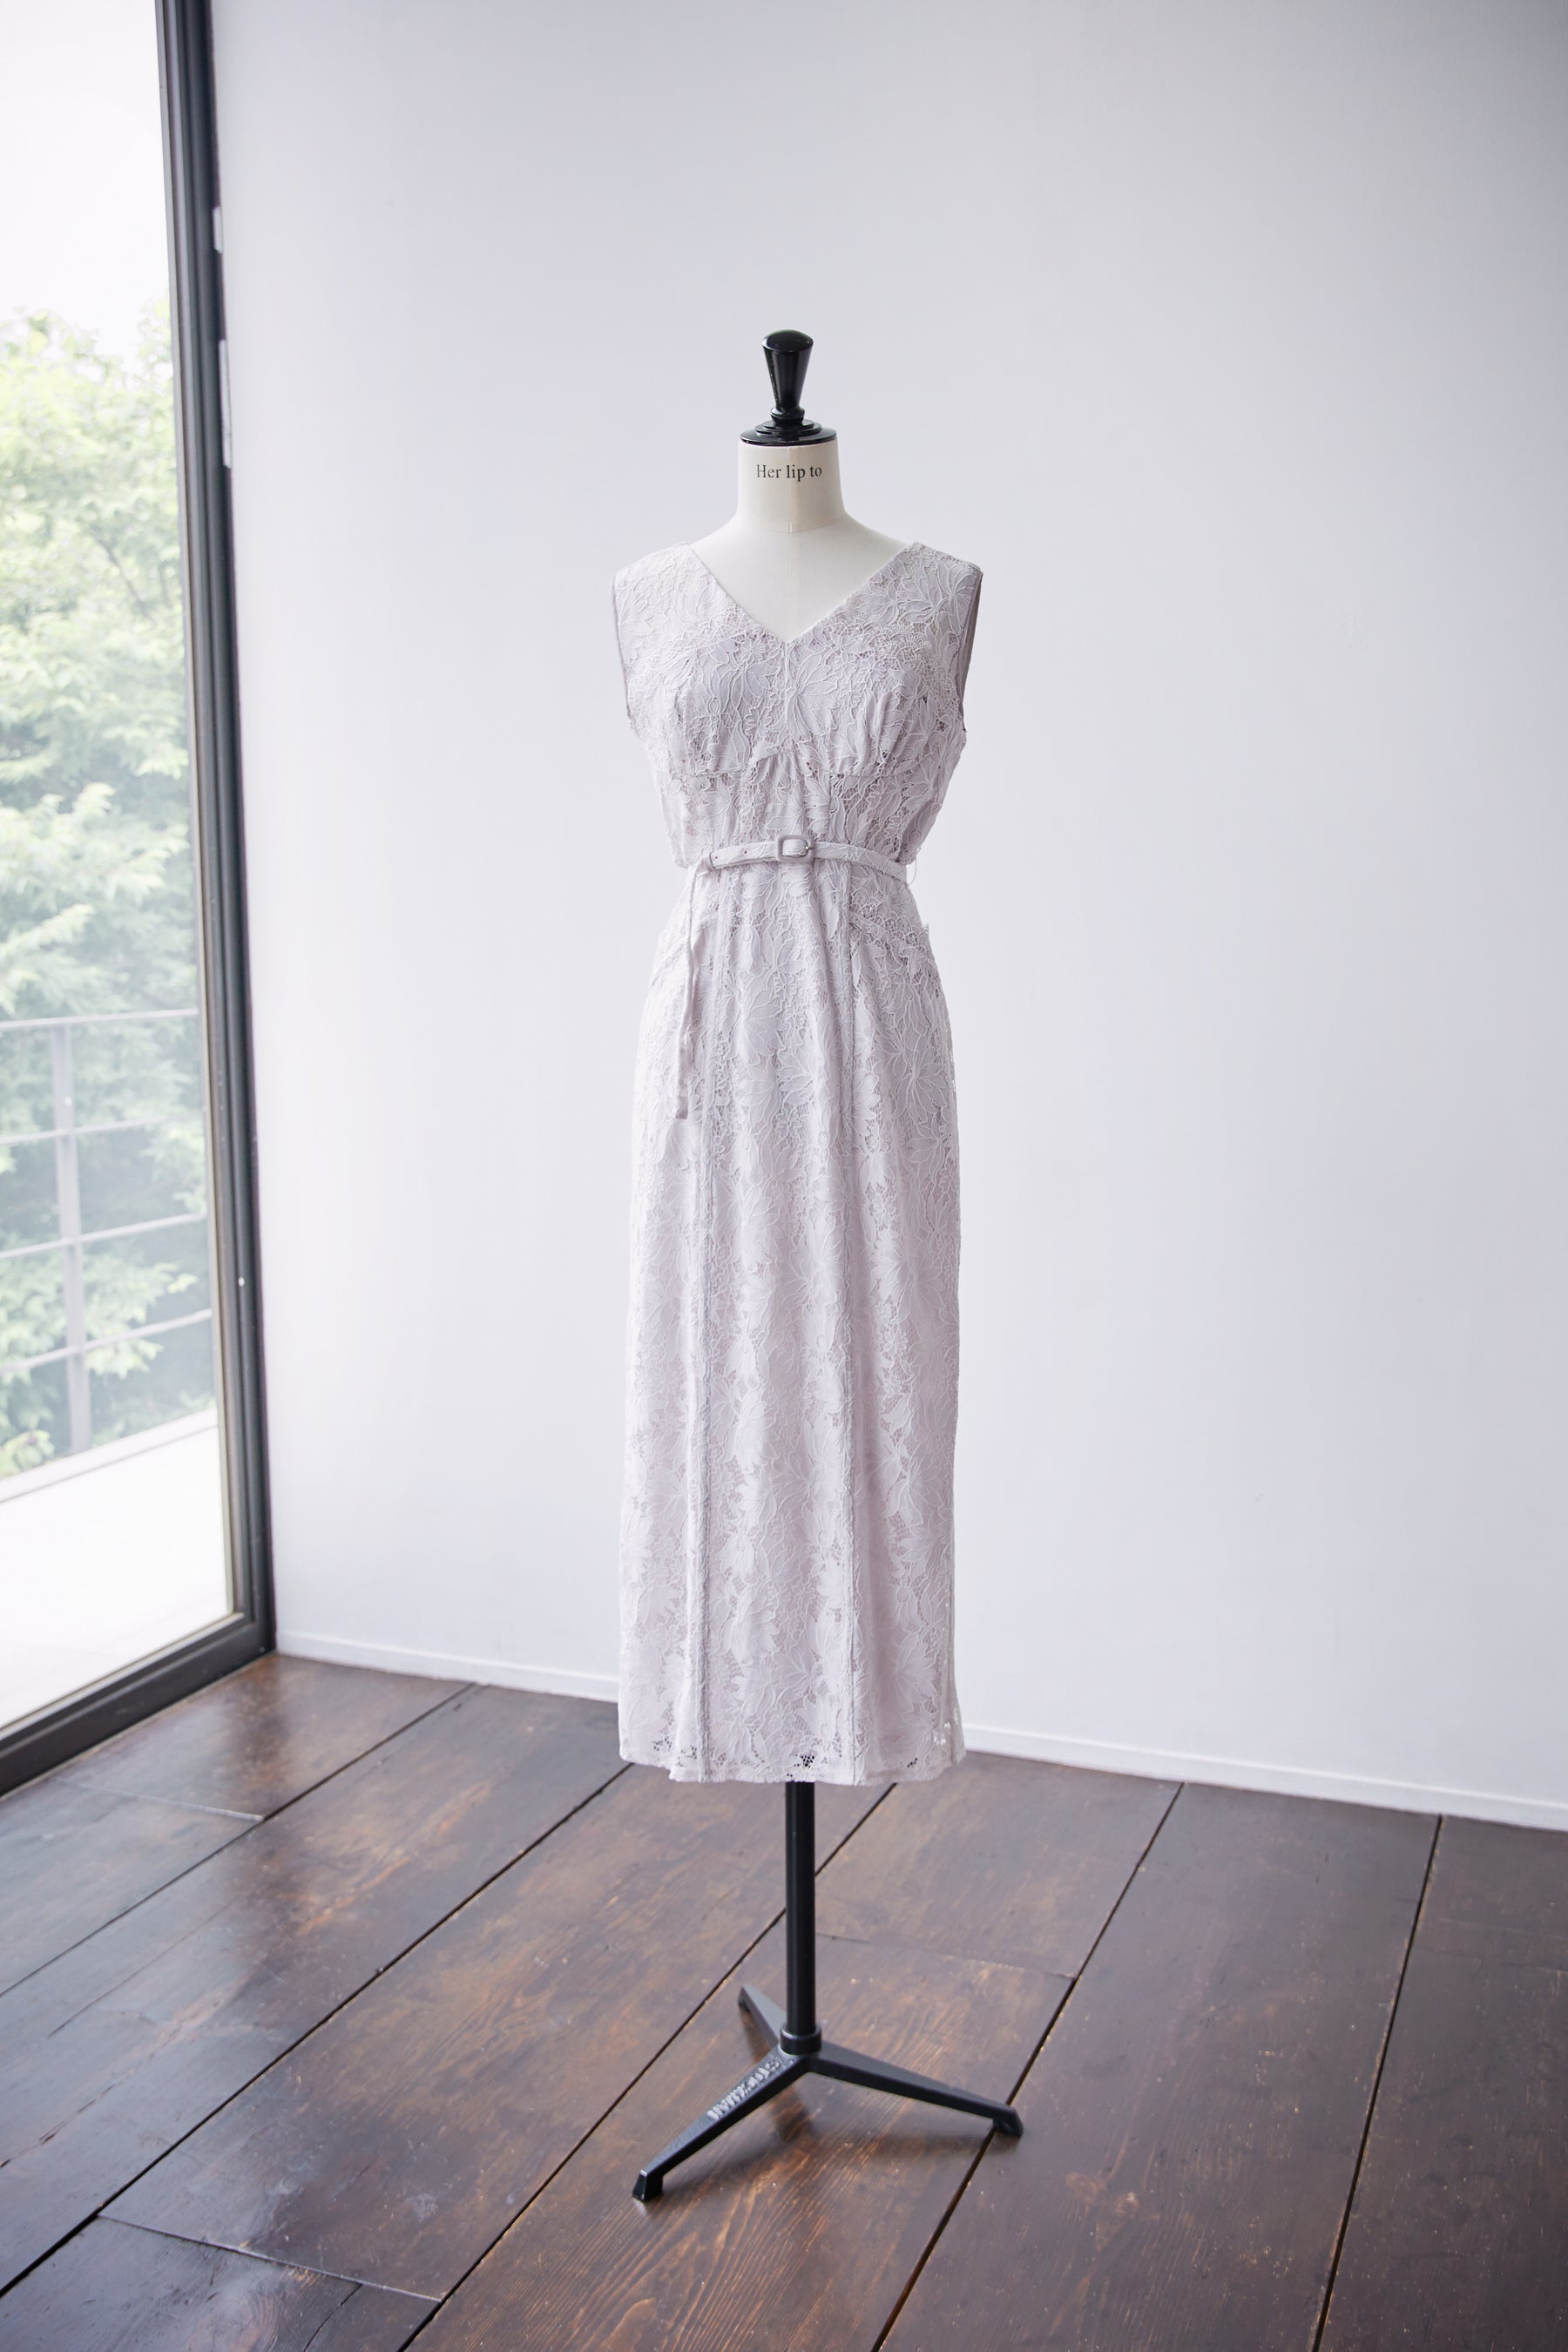 Waltz Floral Lace Belted Dress